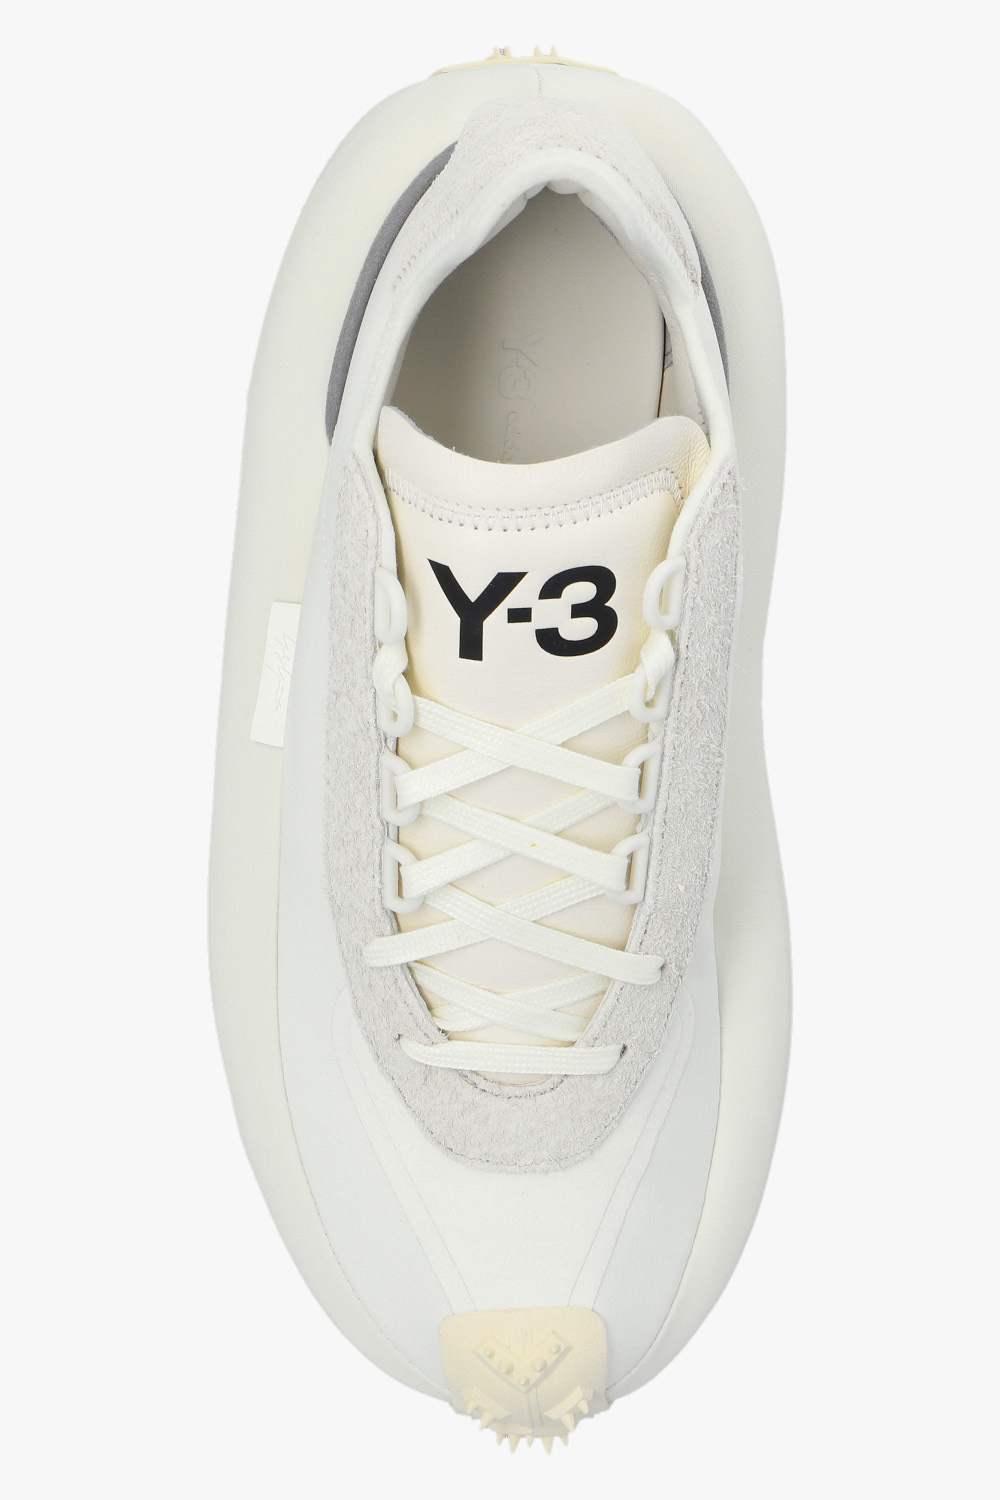 Y-3 Yohji Yamamoto ‘MAKURA’ sneakers